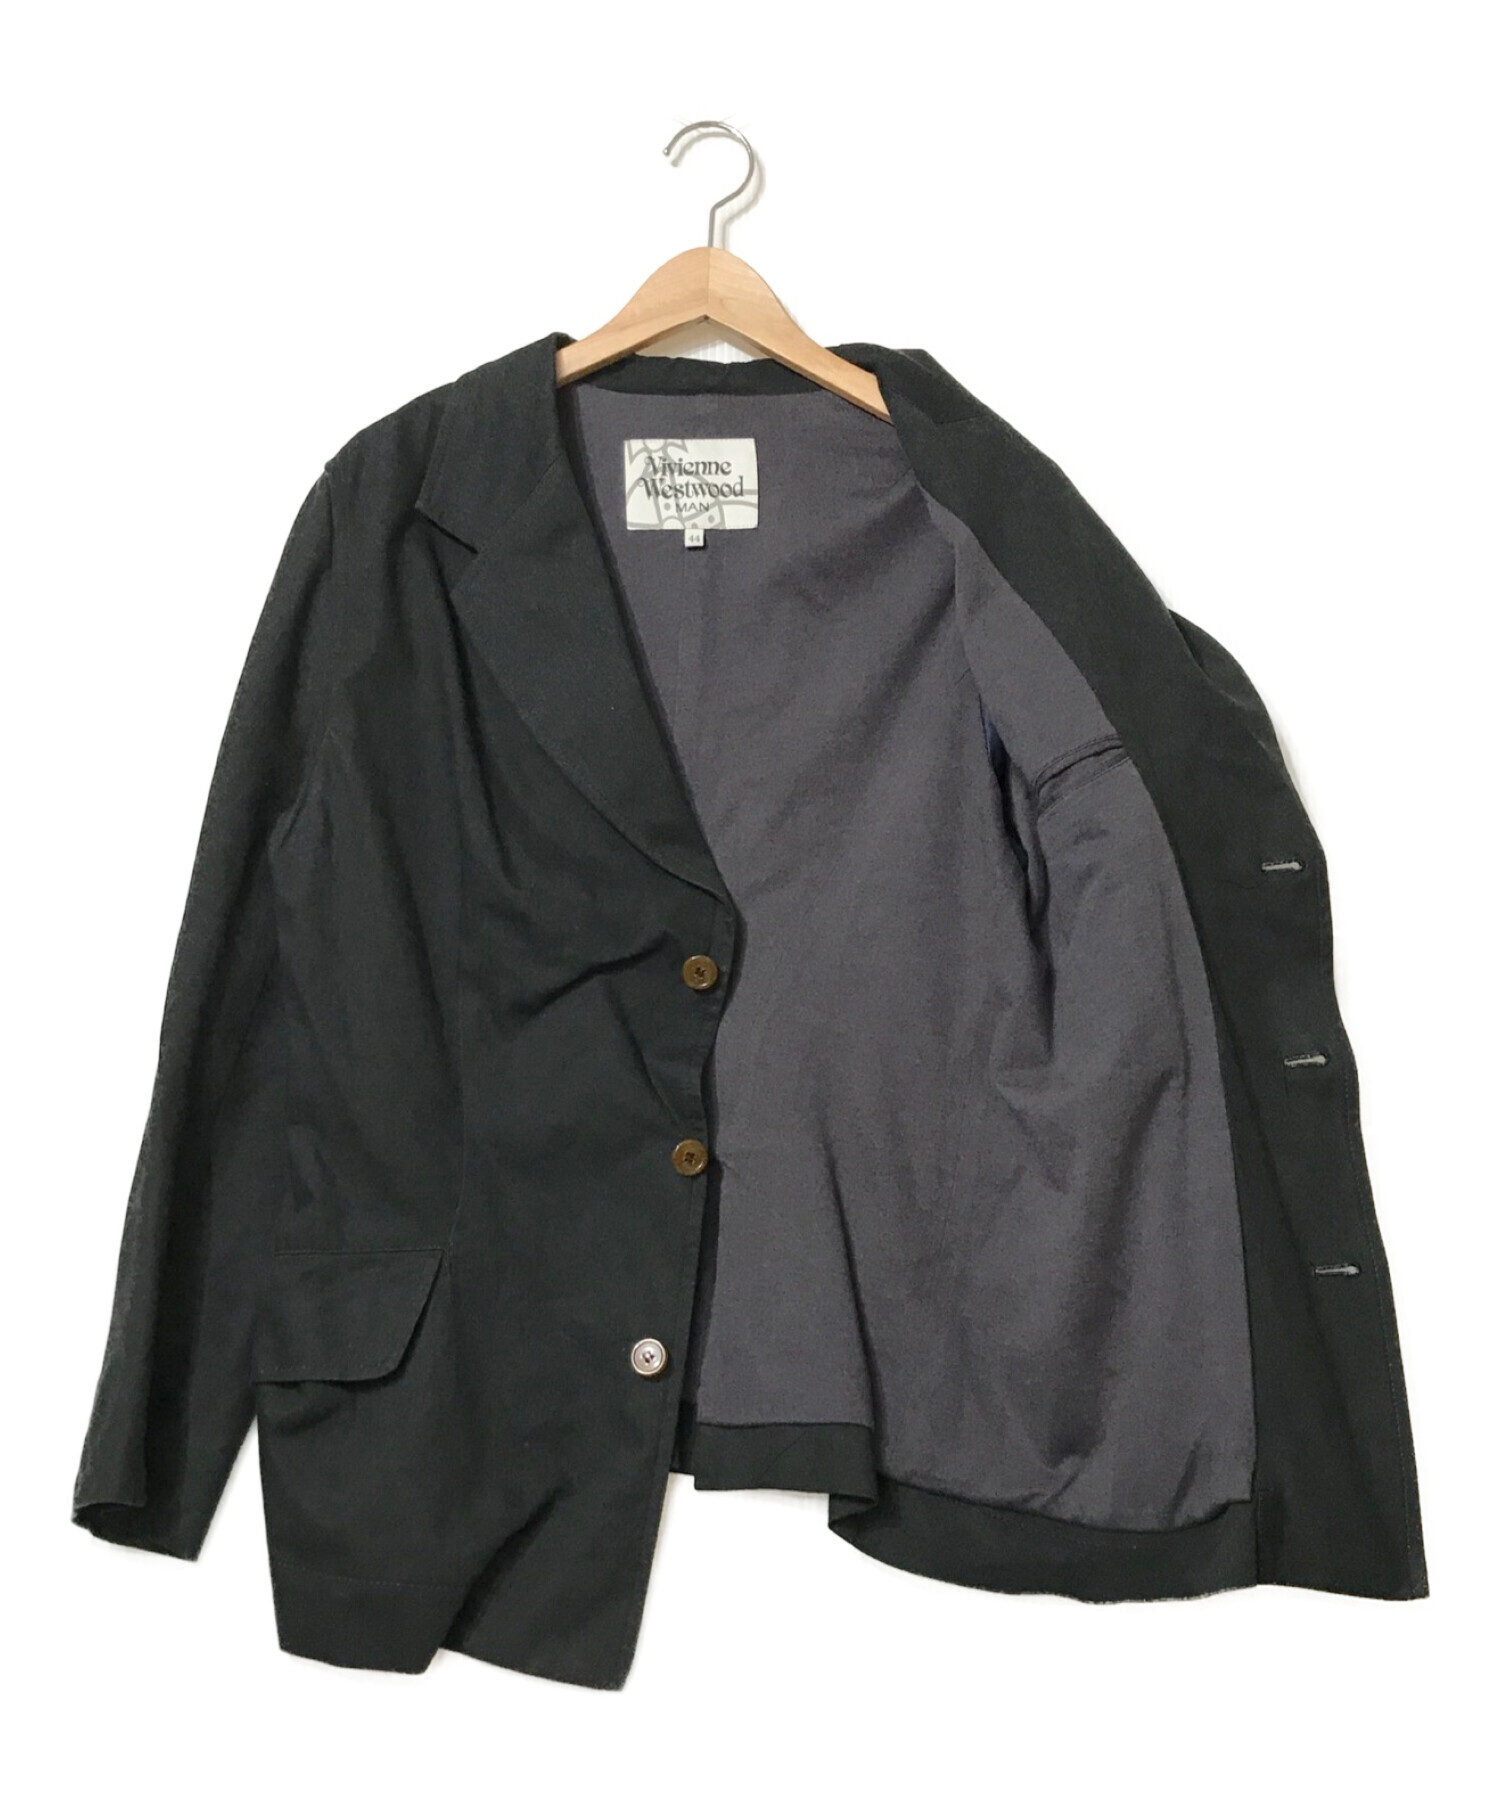 Vivienne Westwood man (ヴィヴィアン ウェストウッド マン) 変形テーラードジャケット ブラック サイズ:44